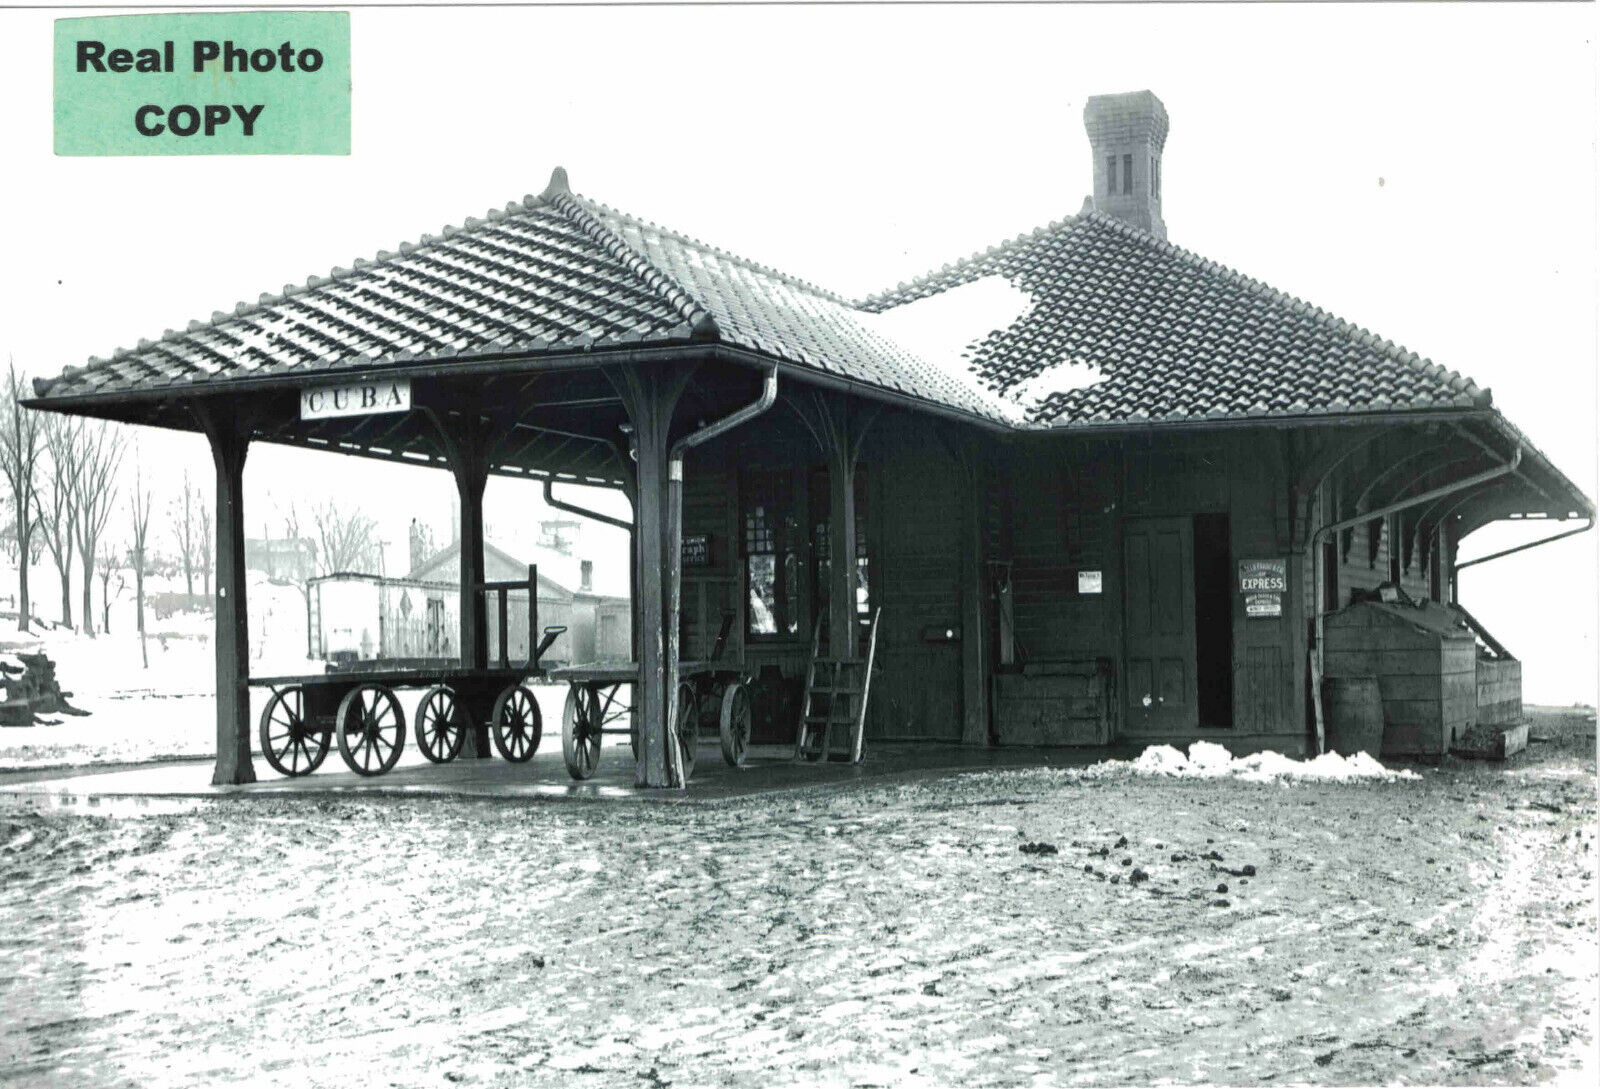 Erie Railroad Depot (train station) at Cuba, Allegany Co., NY